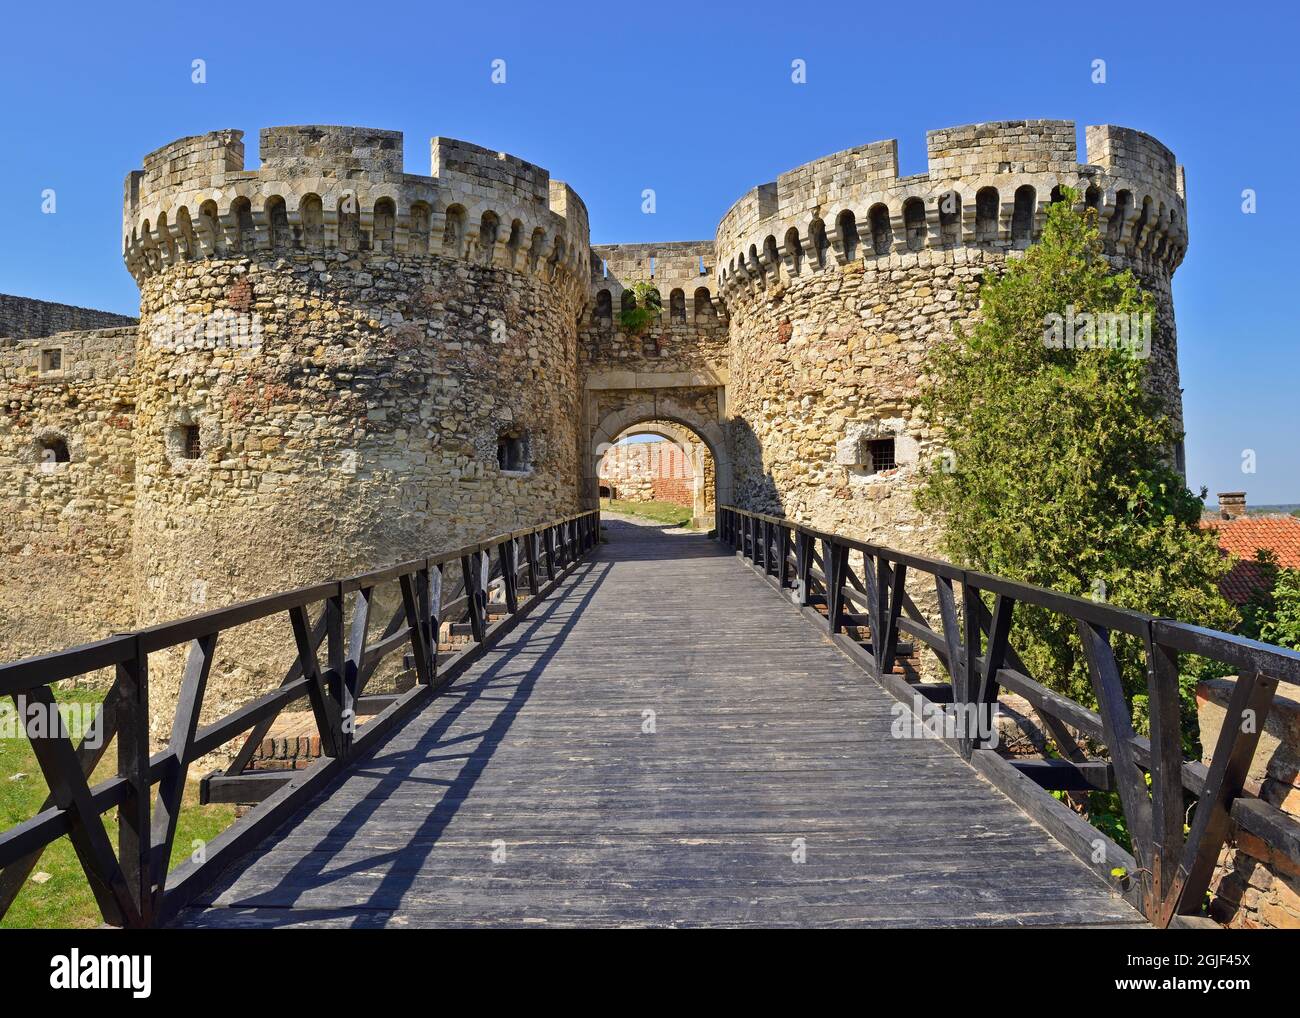 La forteresse de Kalemegdan, Belgrade, Belgrade, Serbie Banque D'Images